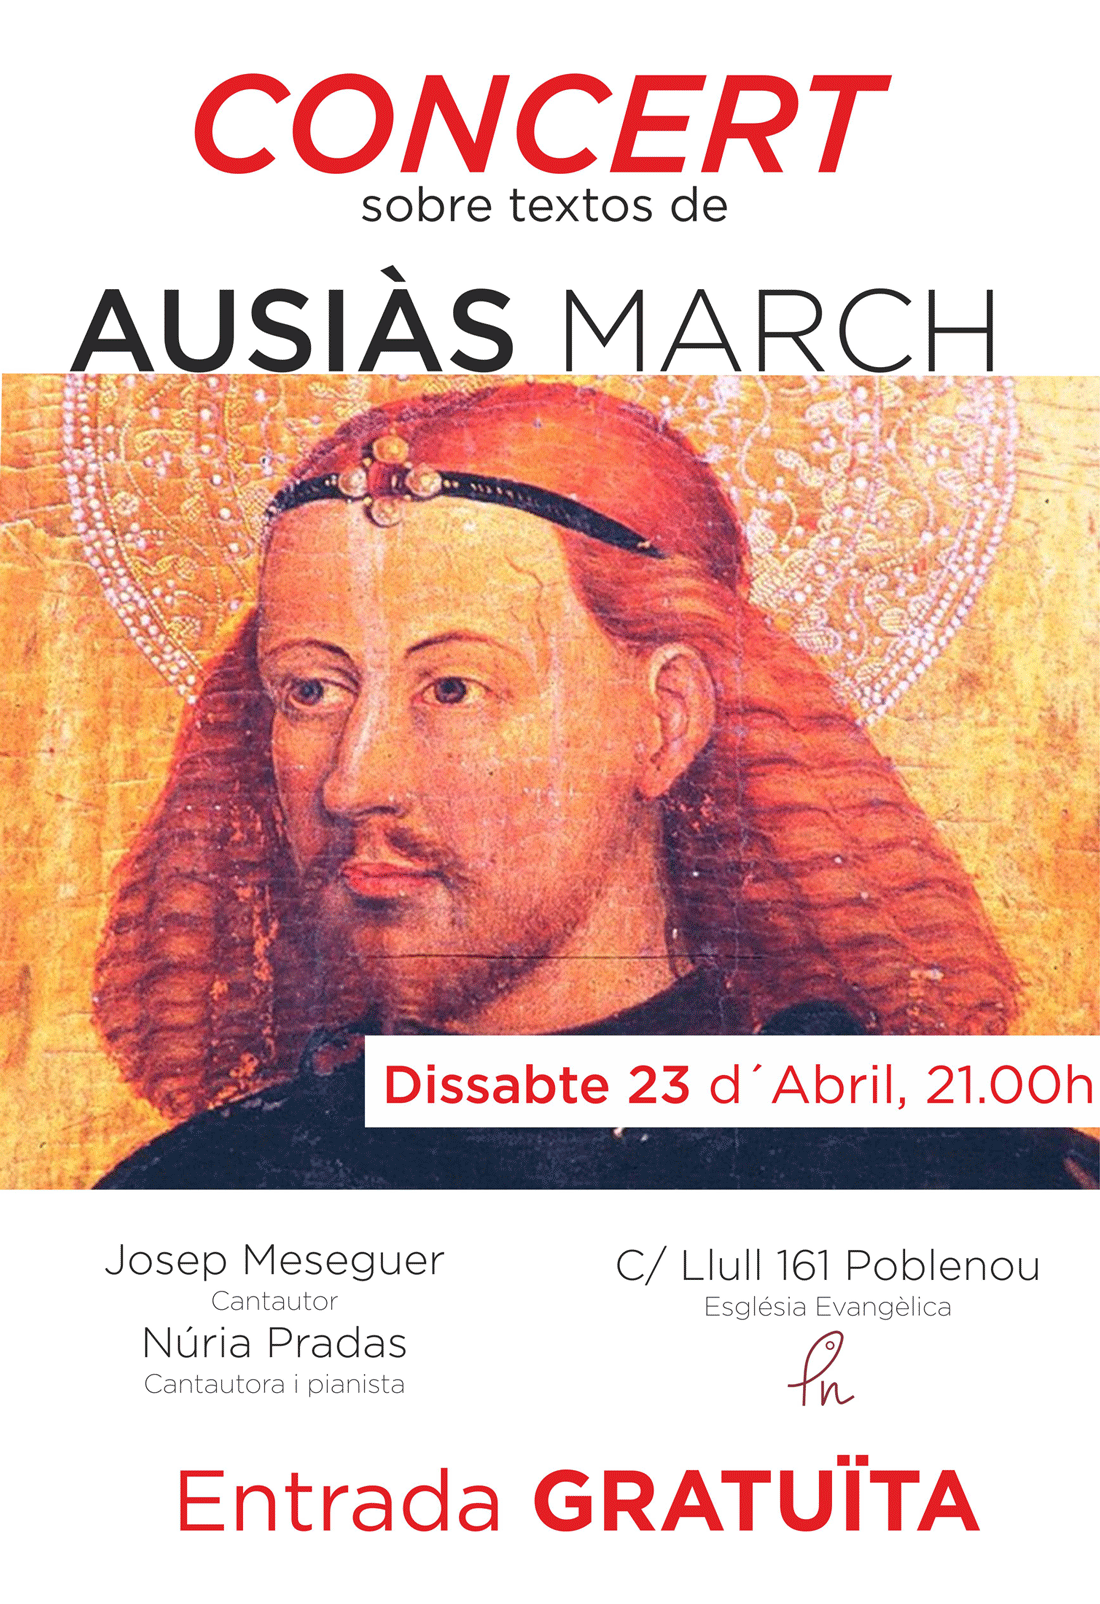 Concert sobre textos de Ausiàs March, Dissabte 23 d´Abril 21.00h ENTRADA GRATUÏTA